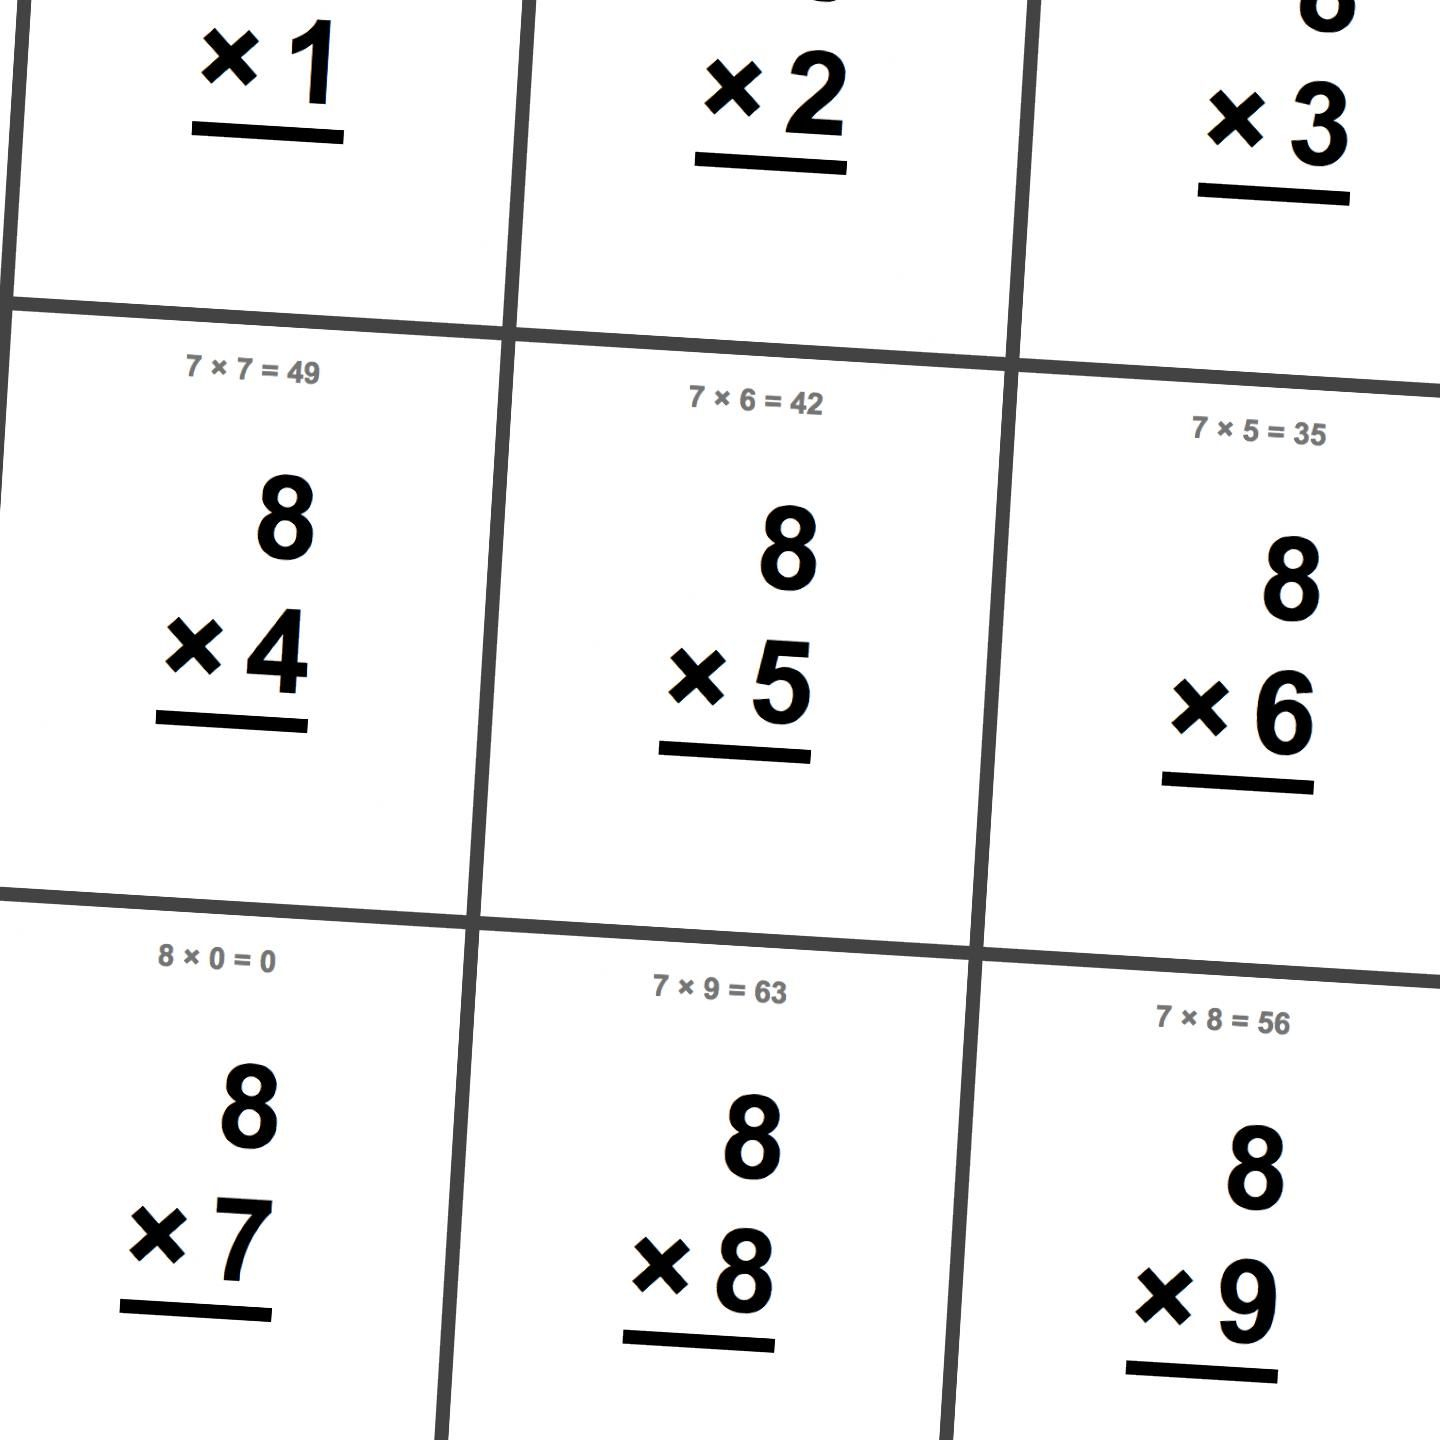 Multiplication Flash Cards Printable Pdf qcardg